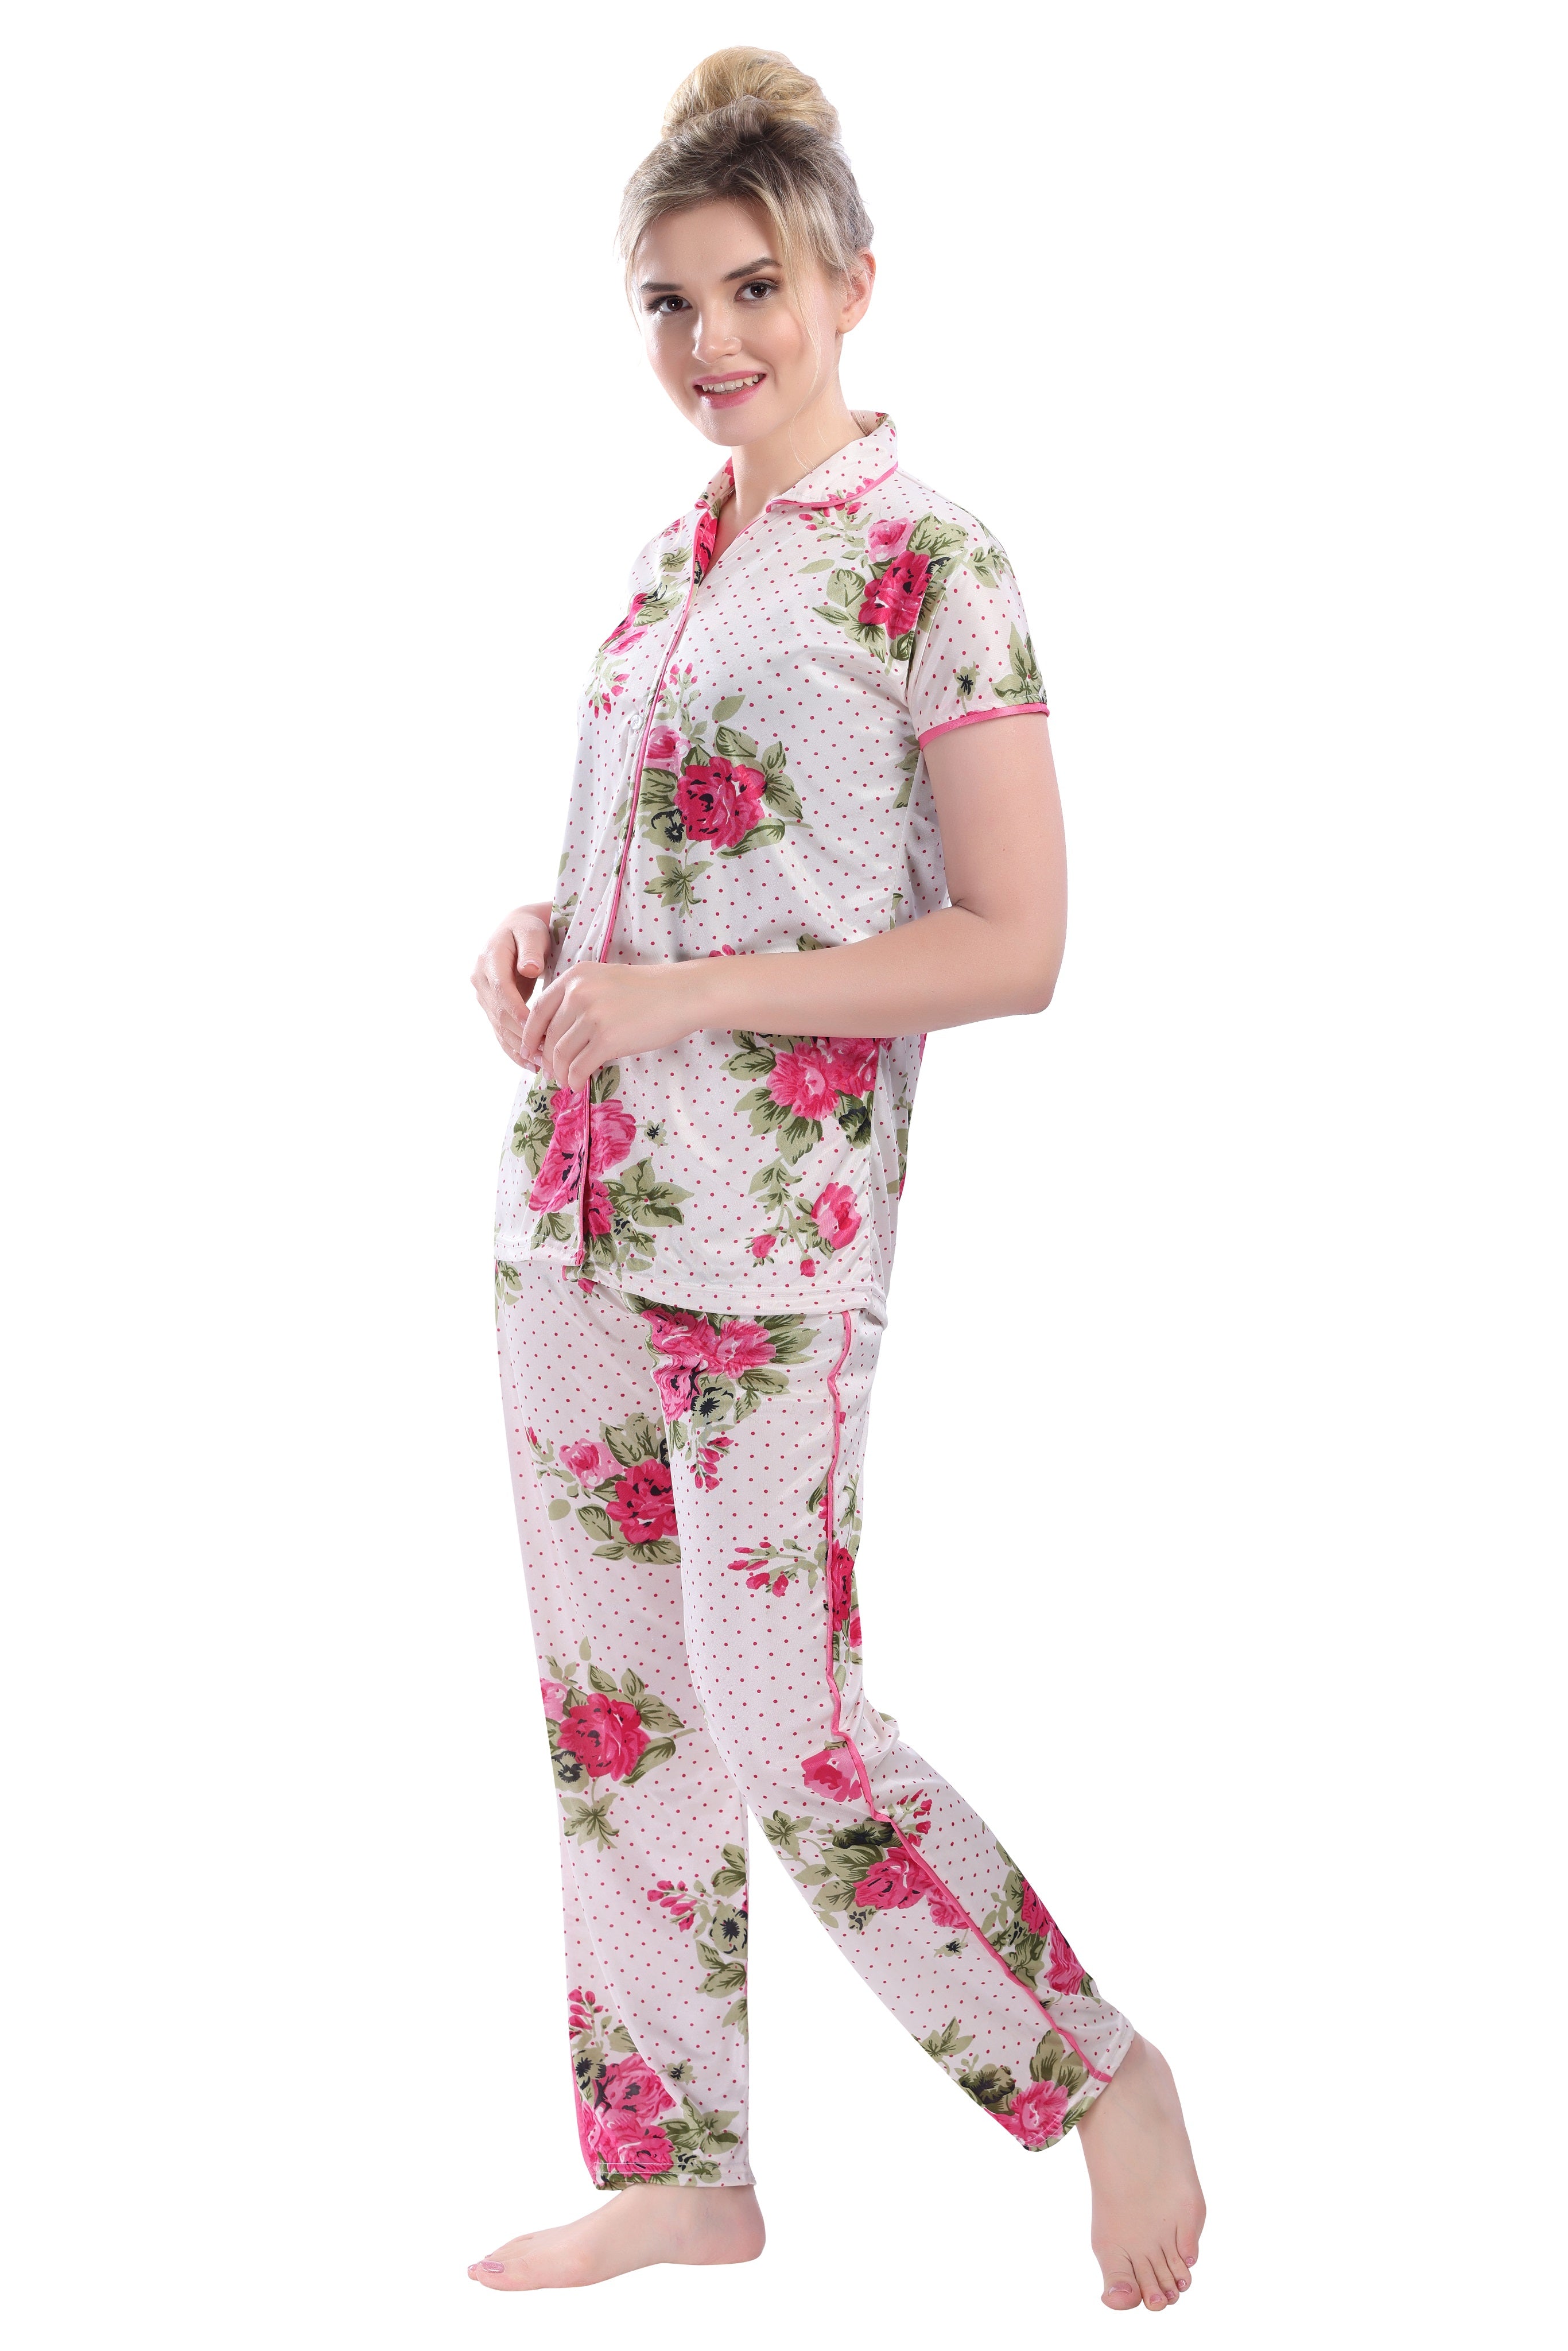 Skkinvalue's Floral printed satin crop top night suit – skkinvalue